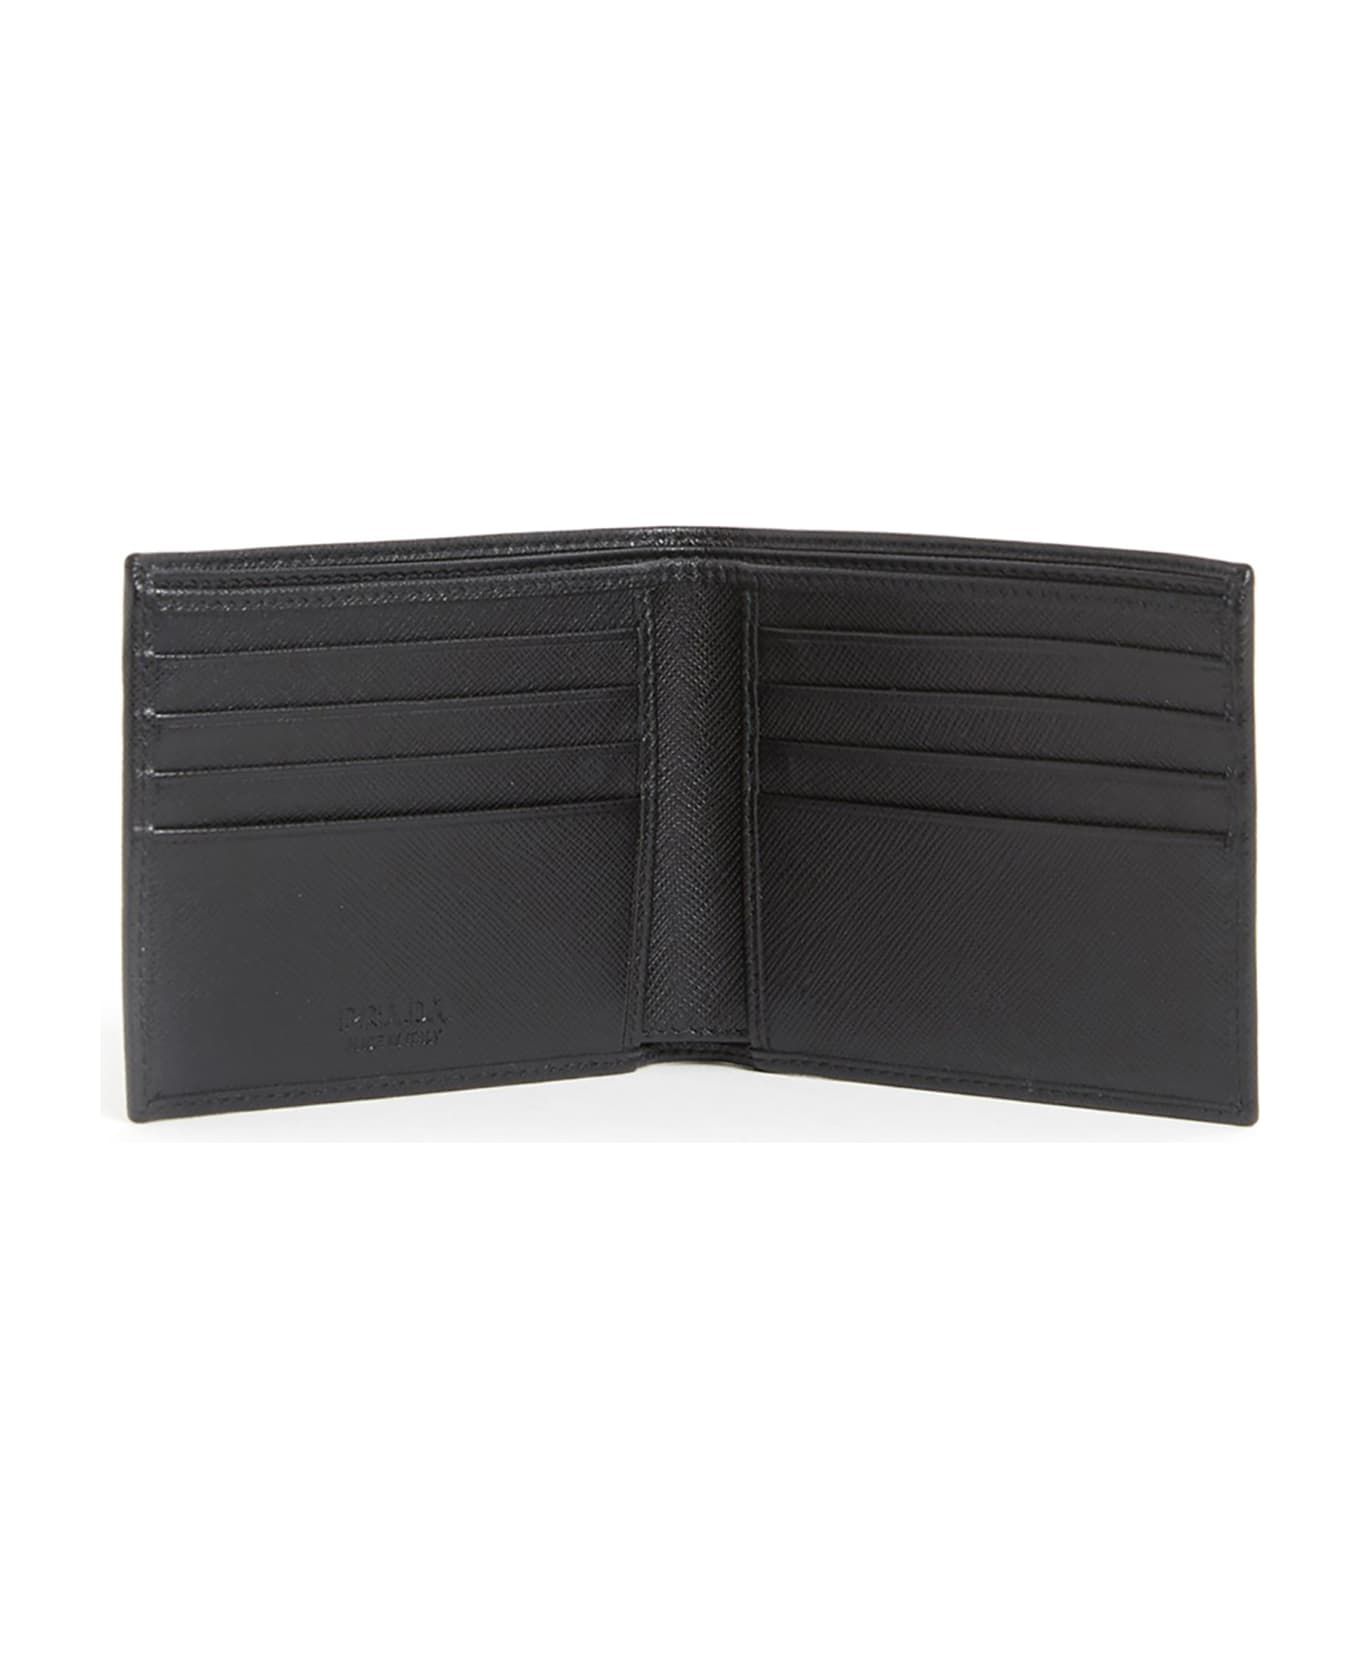 Prada Wallet - F0002 財布